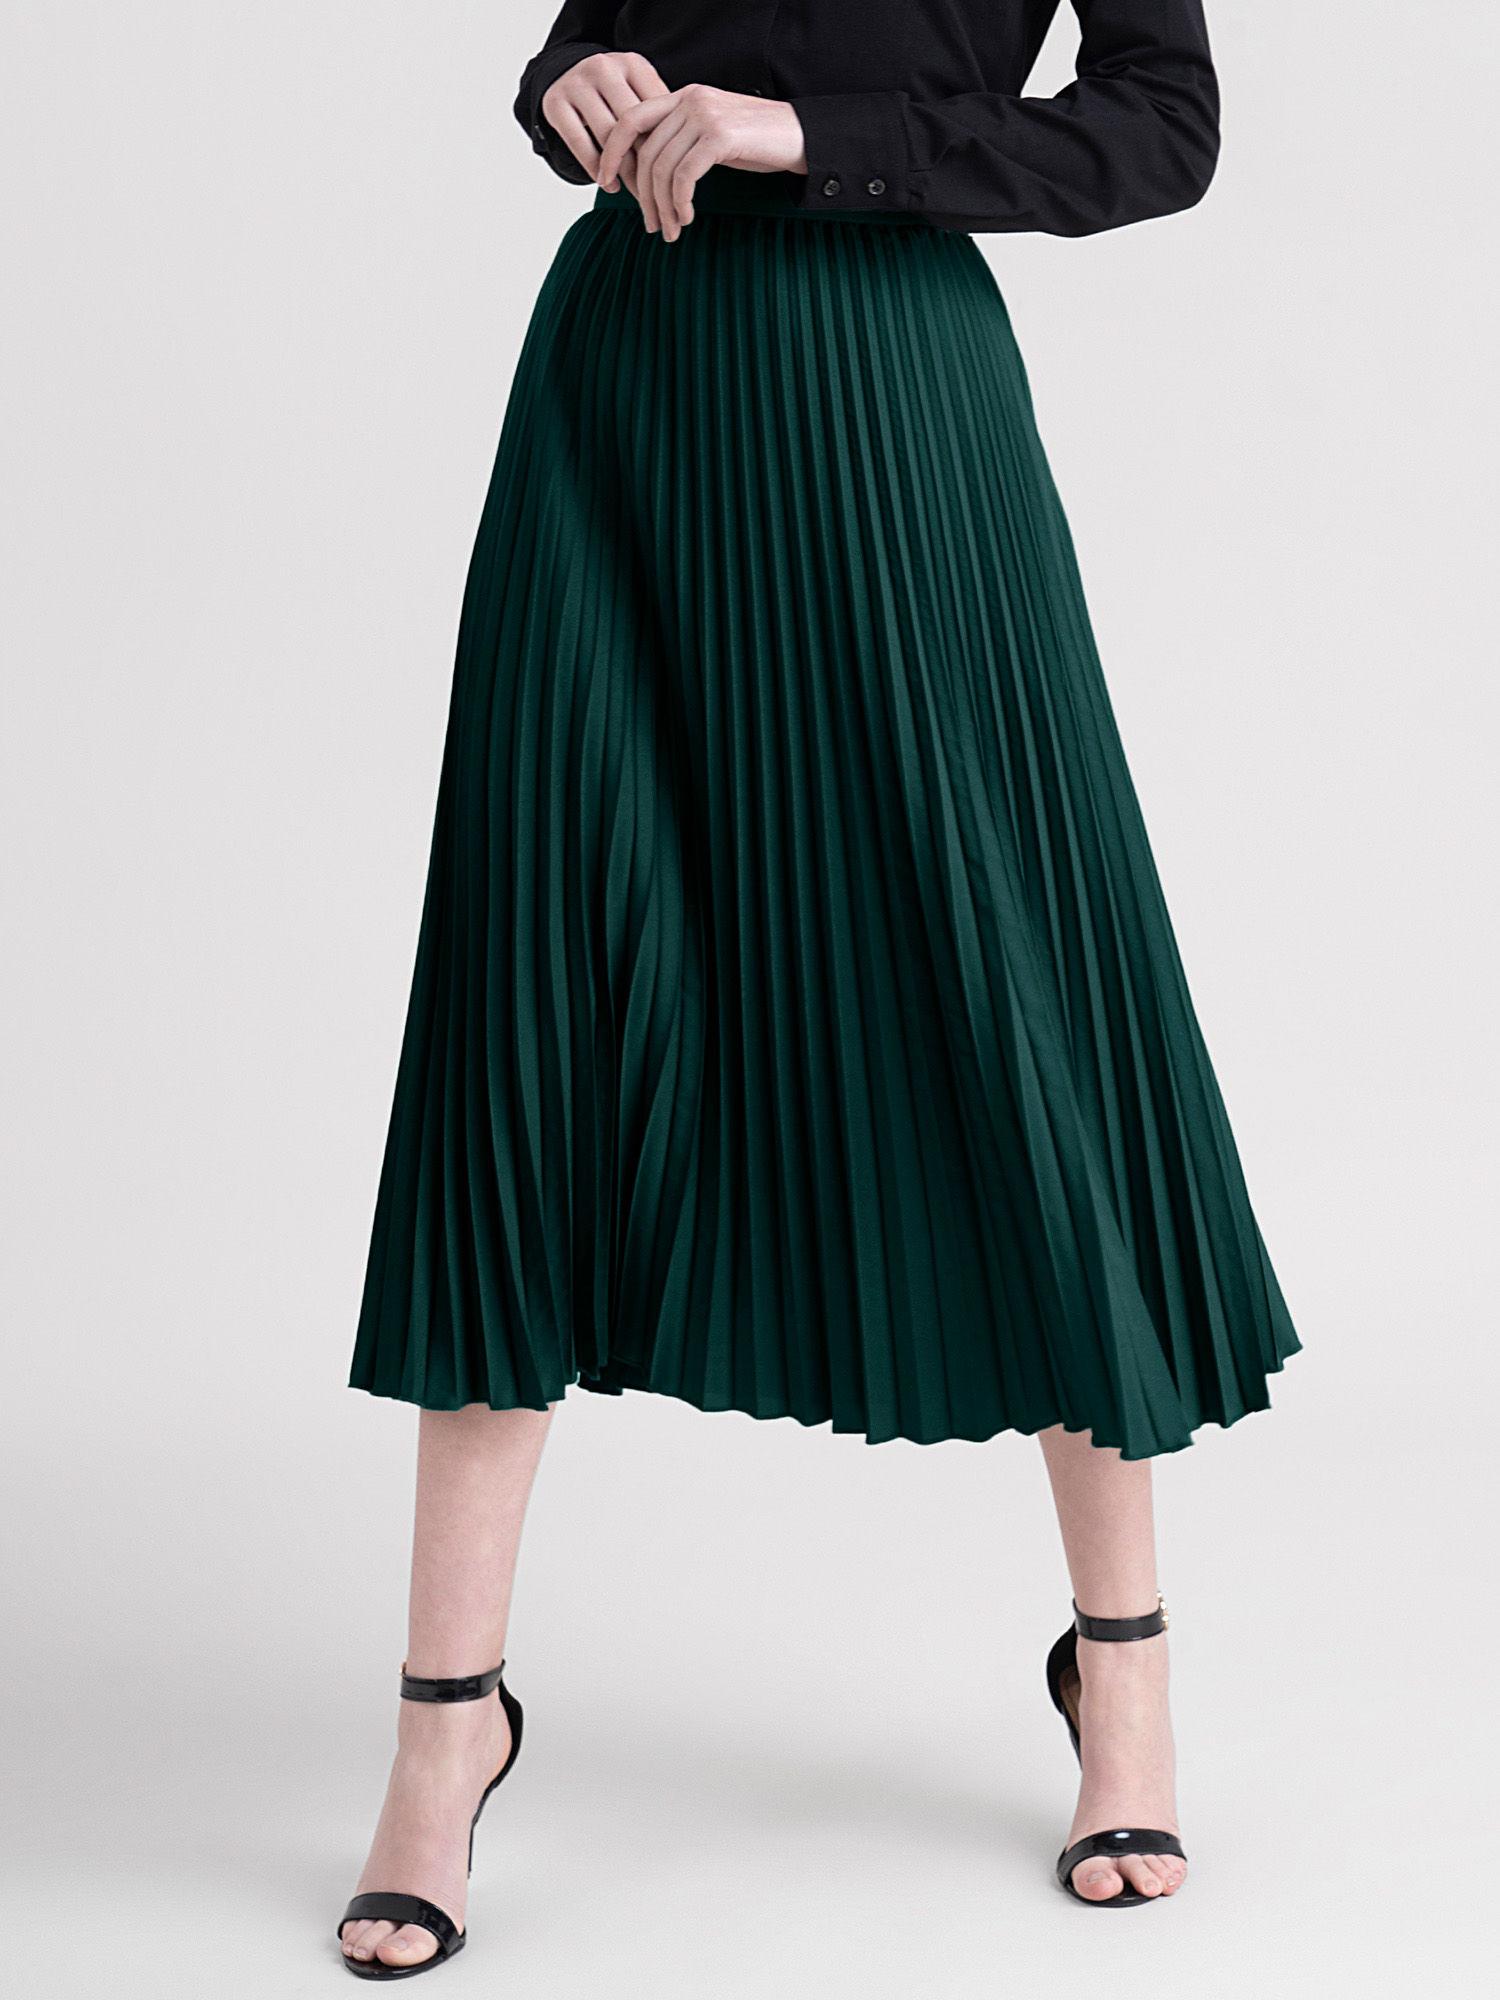 sap-green-accordion-pleated-skirt